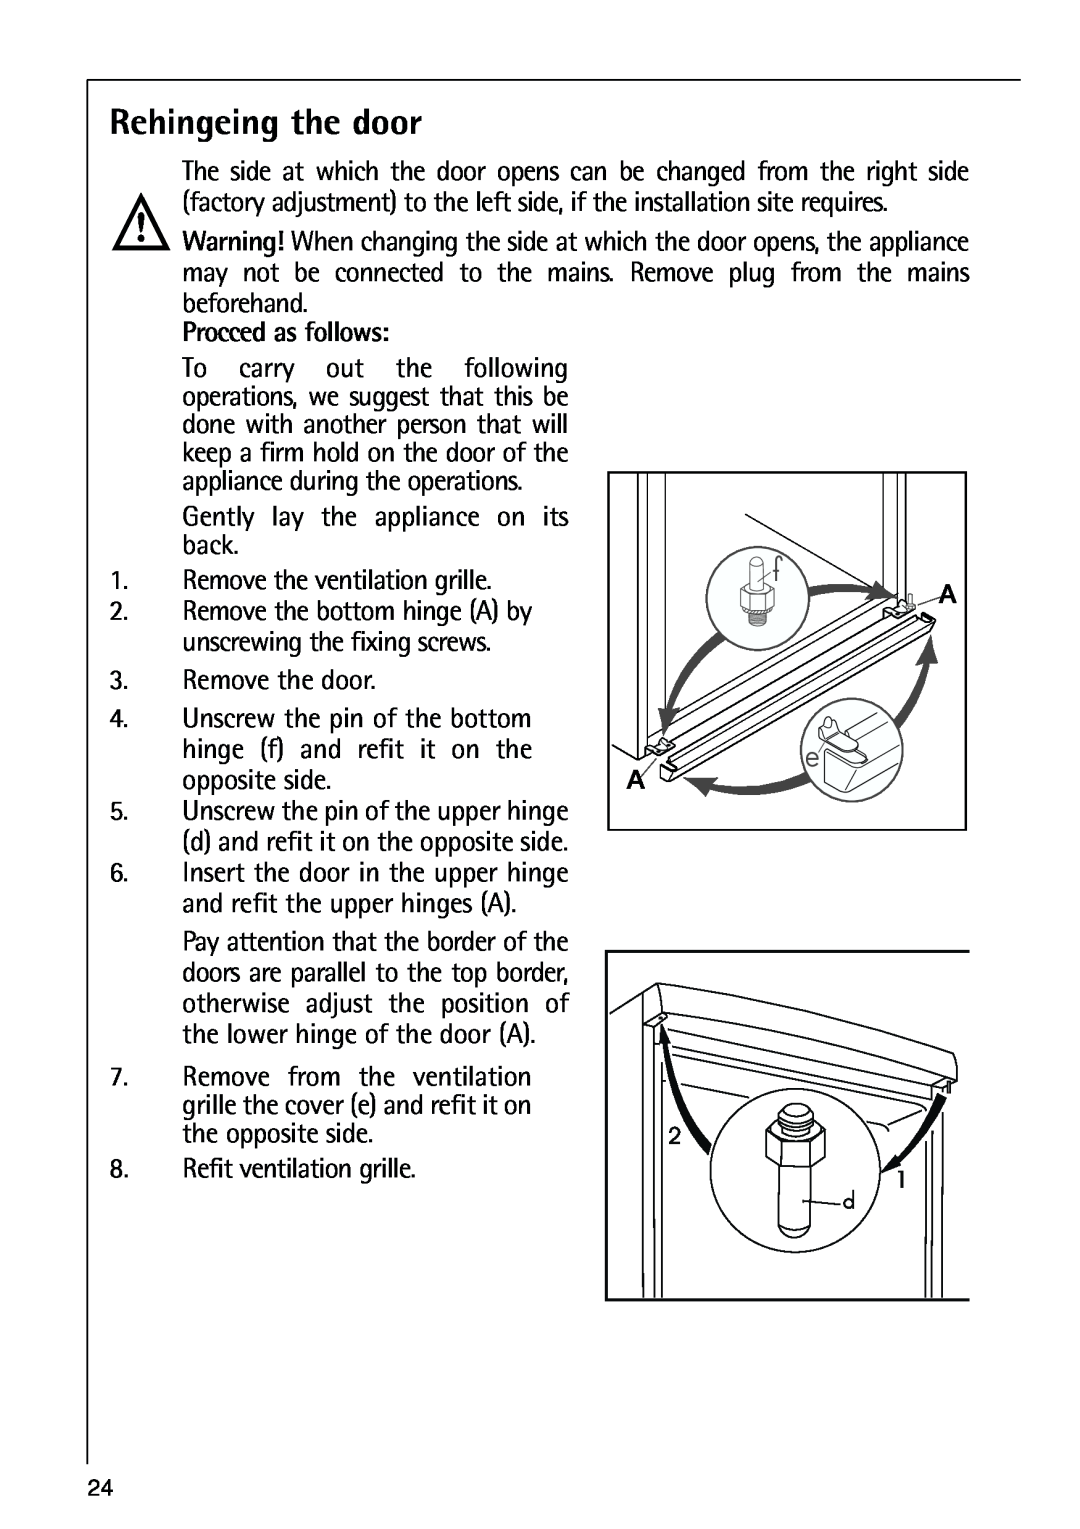 Electrolux 72398 KA user manual Rehingeing the door, Procced as follows 